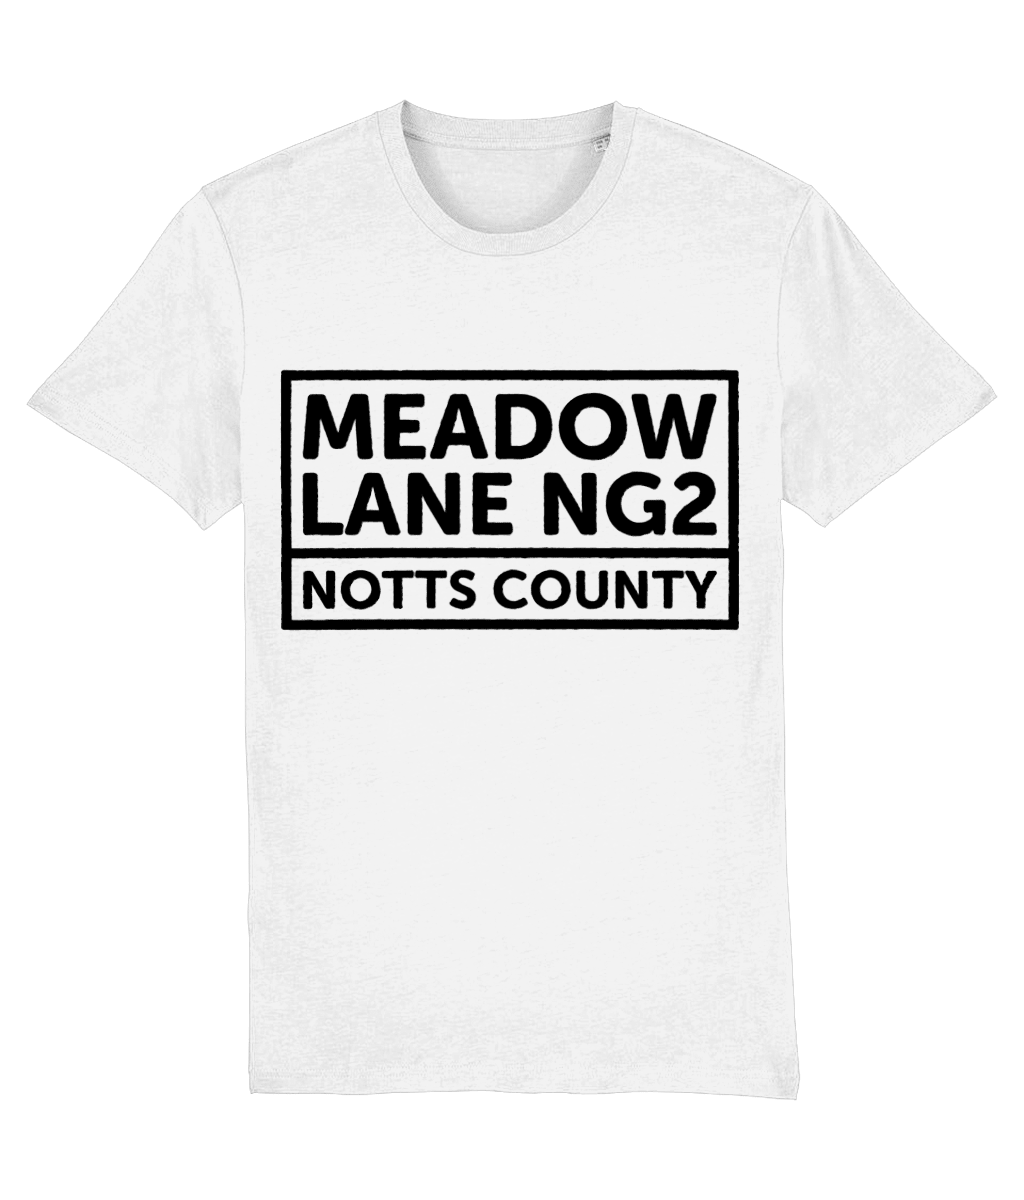 Meadow Lane NG2 Notts County Plain-White T-Shirt